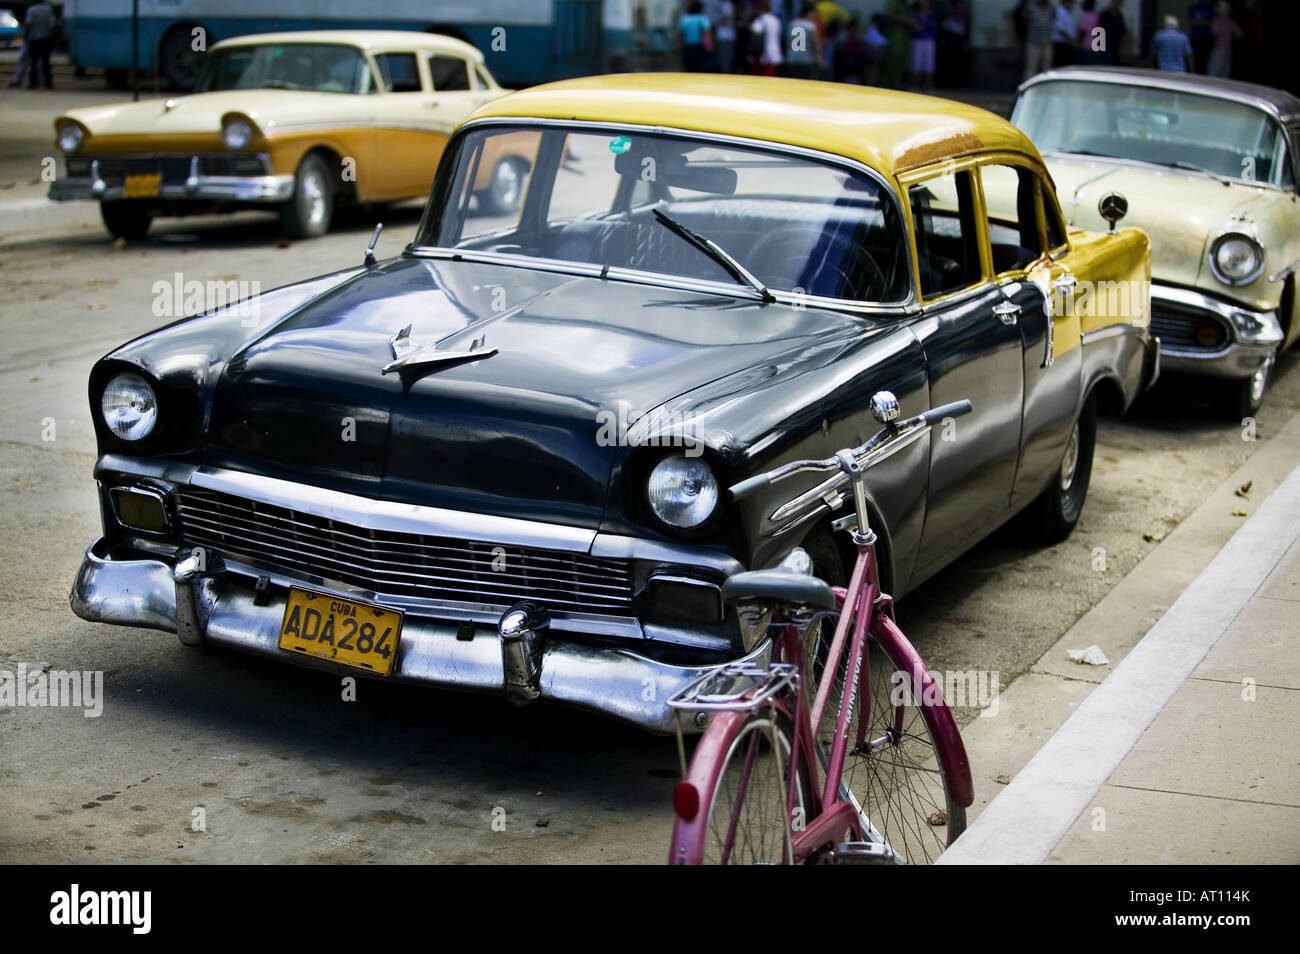 Antigua de América (Chevrolet Chevy) se encuentra estacionado en Moran (Cuba). Coches clásicos Americanos son vistos en toda Cuba. Foto de stock